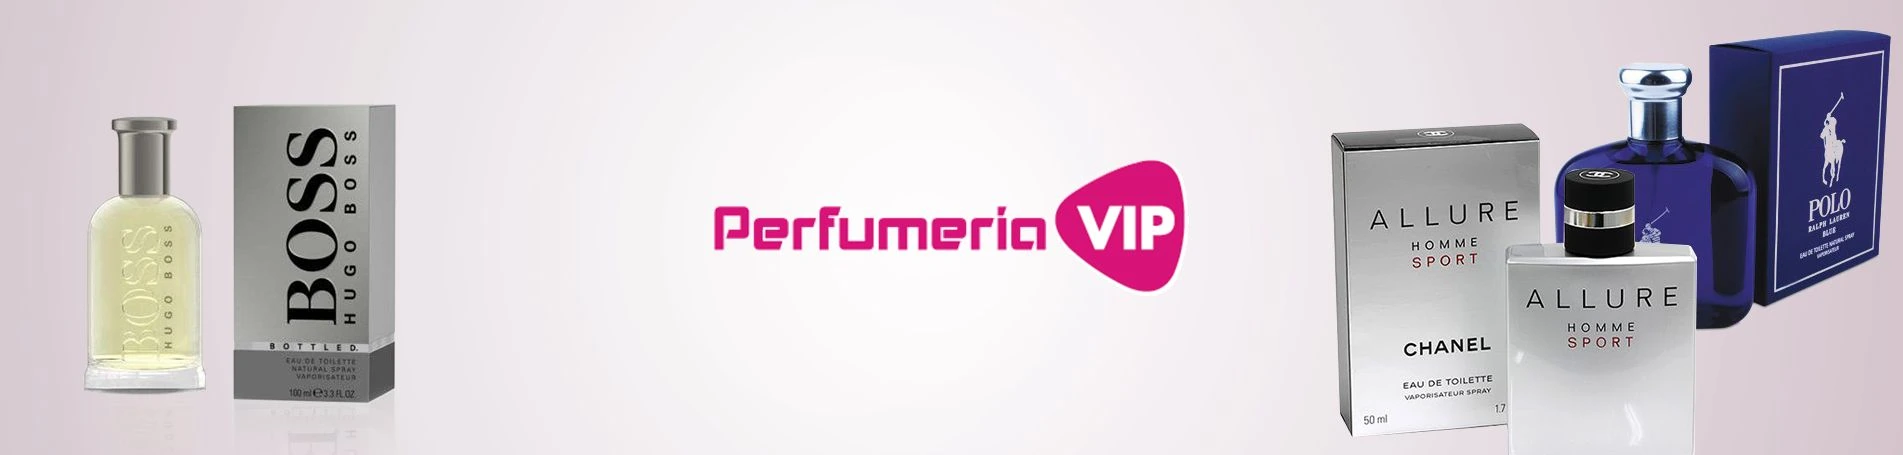 Perfumeria VIP ahora cuenta con Lifting Consulting